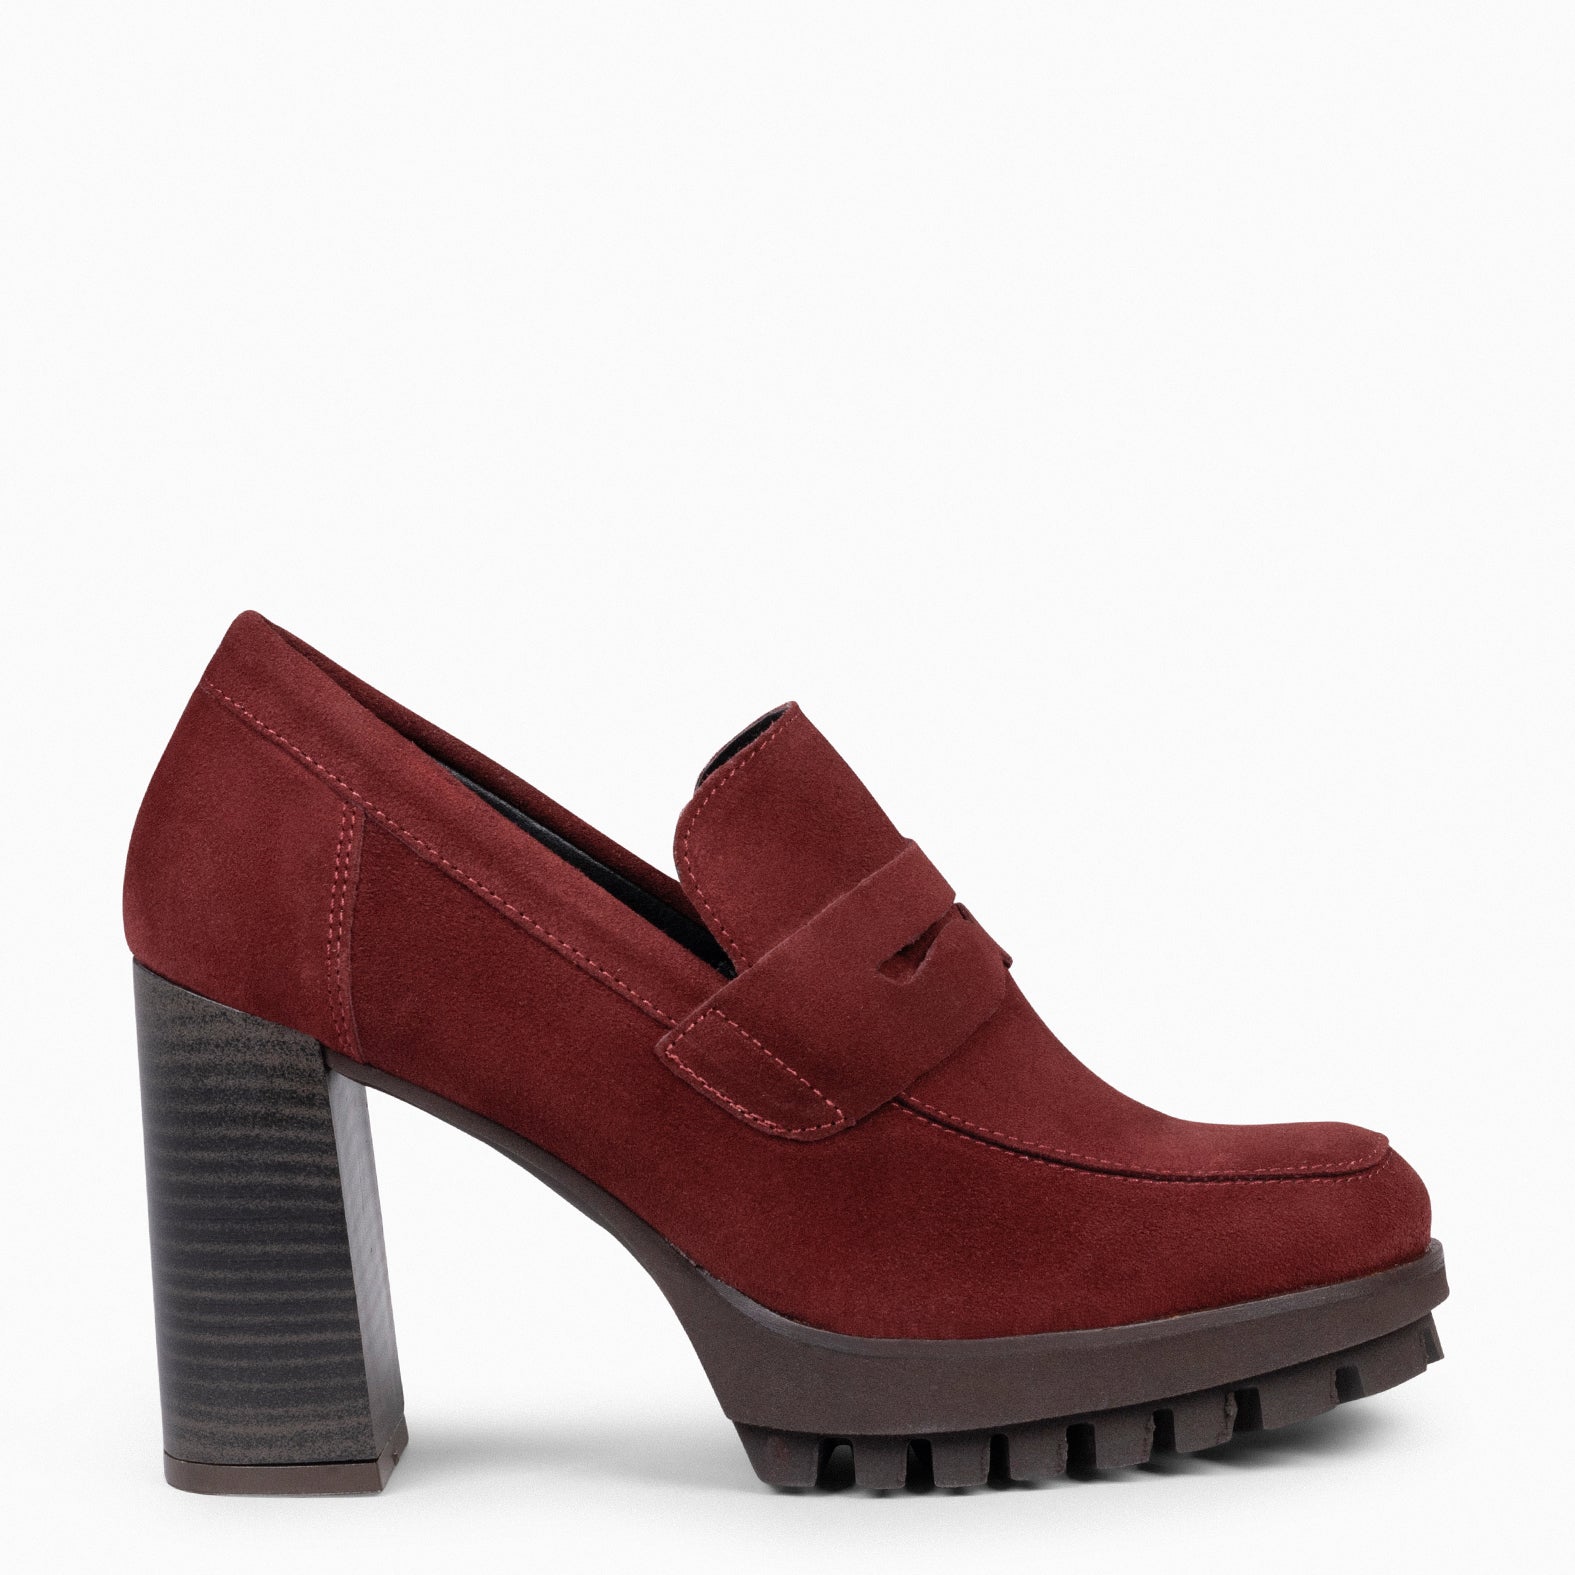 TREND – BURGUNDY high heel moccasins with platform 